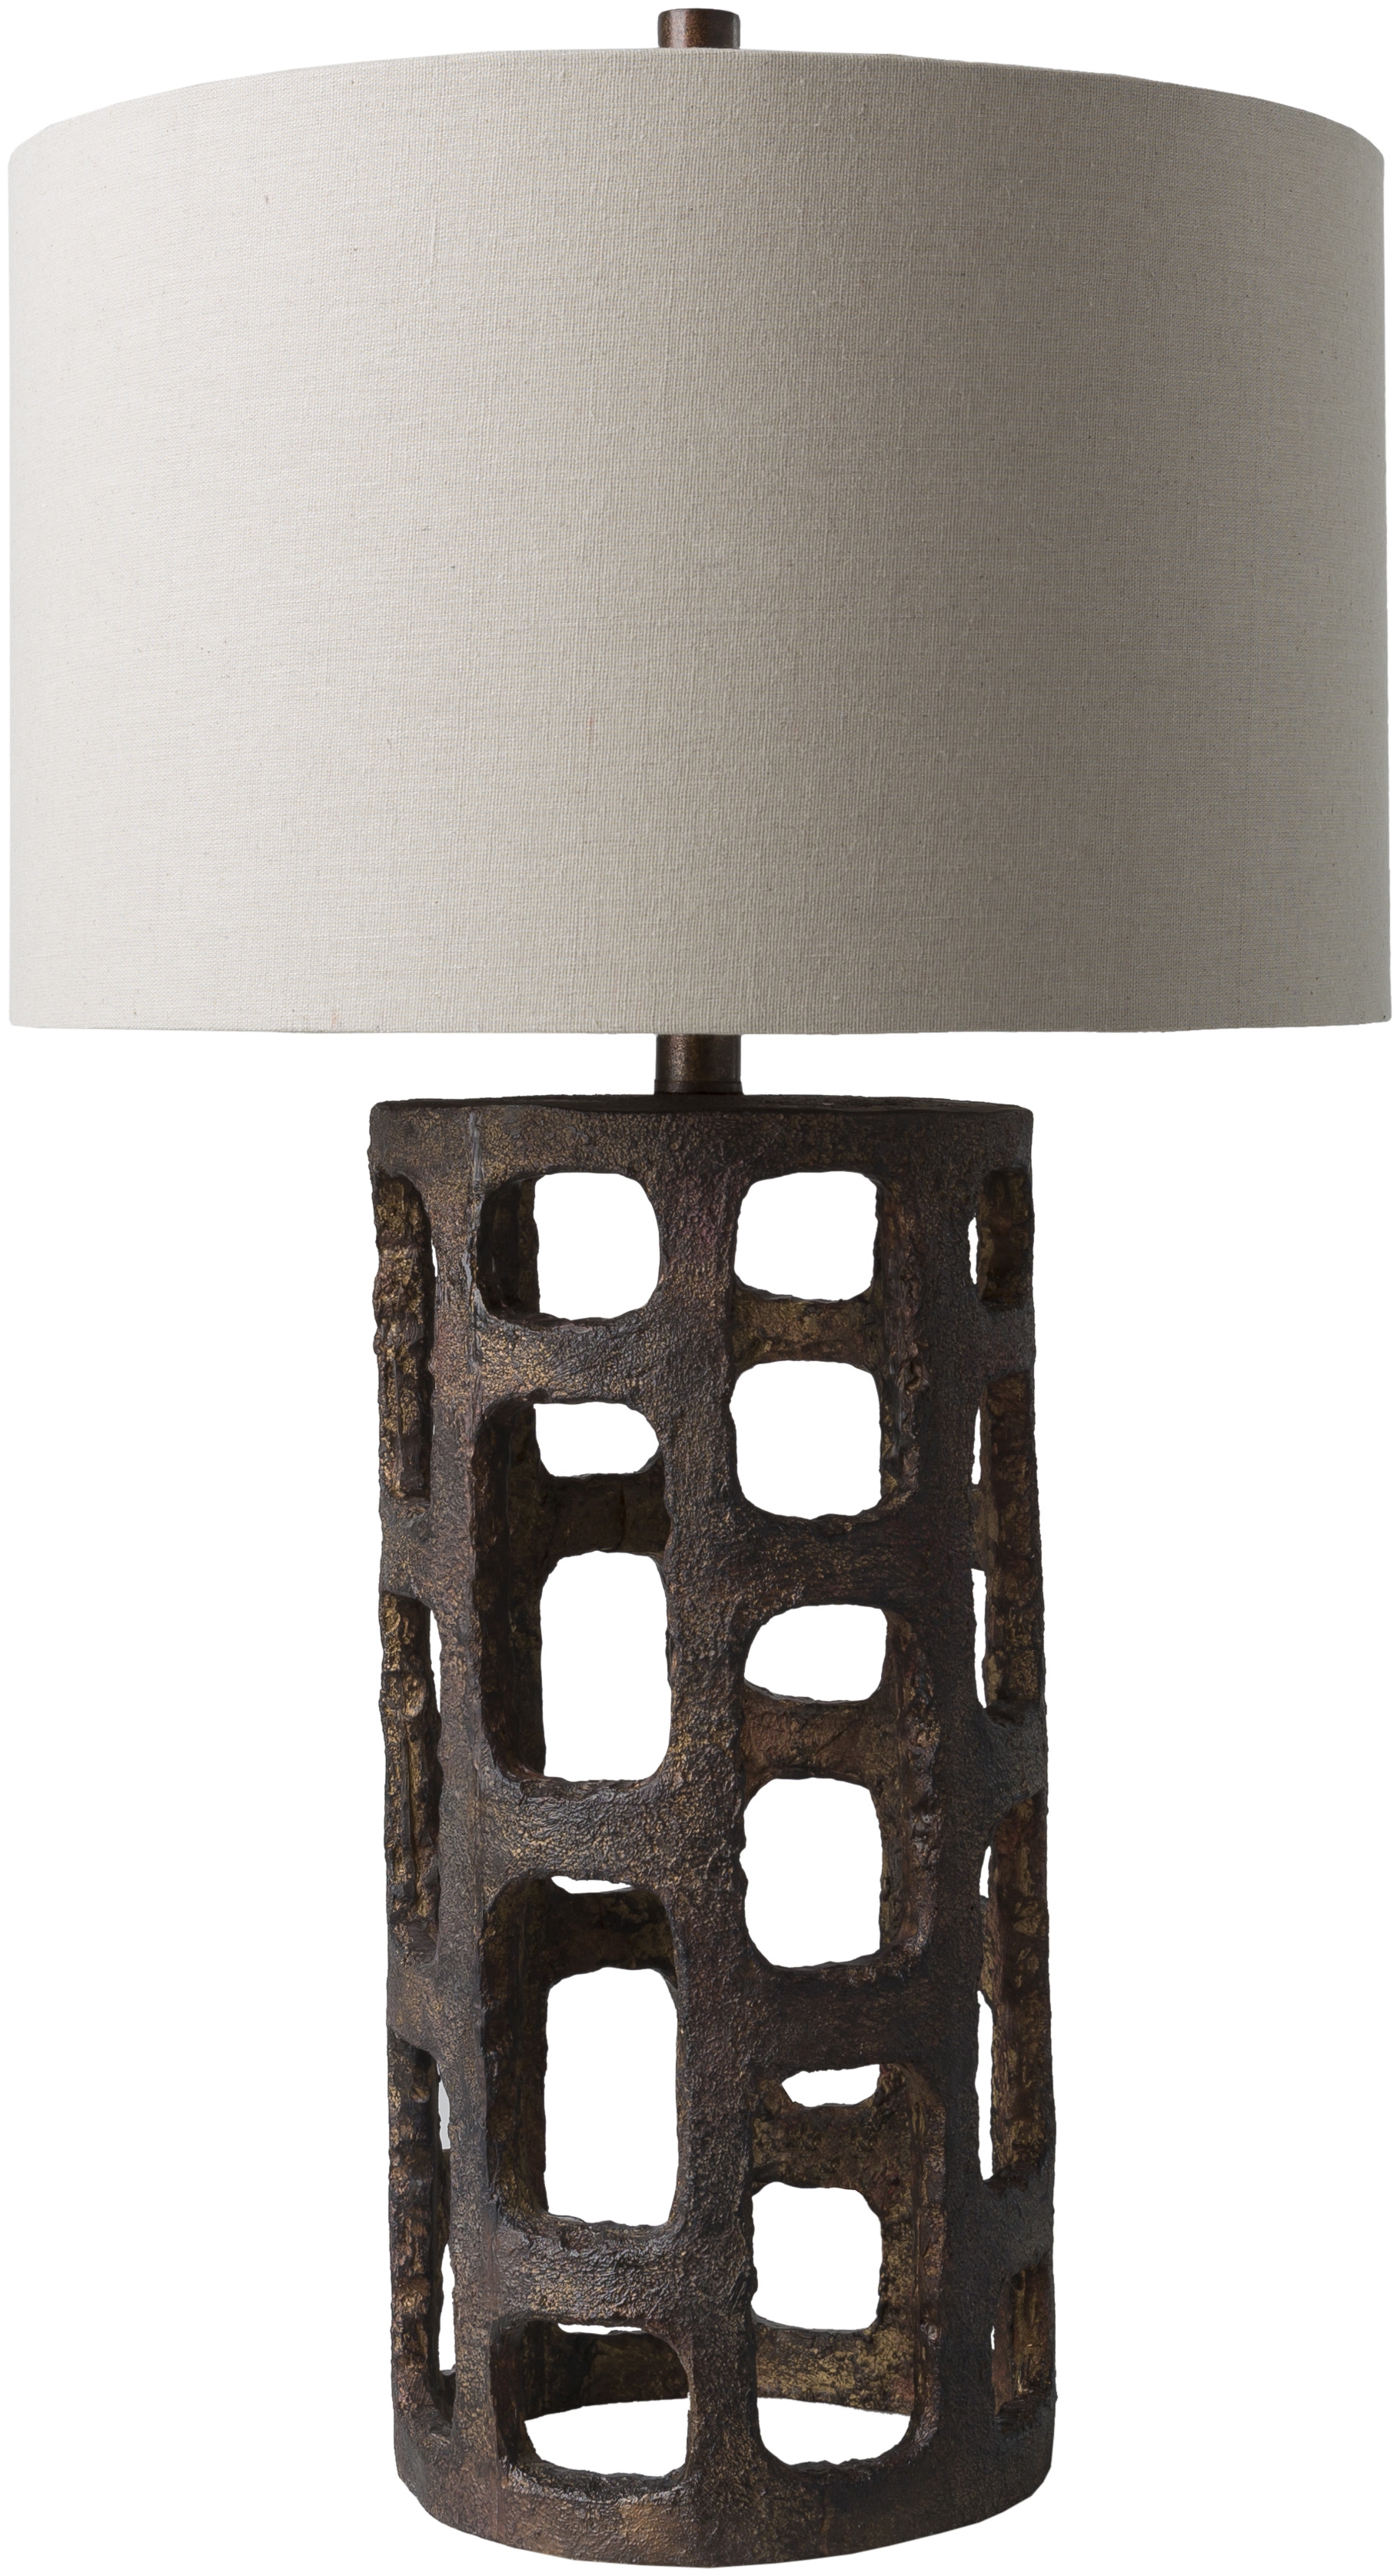 Egerton Table Lamp - Image 0